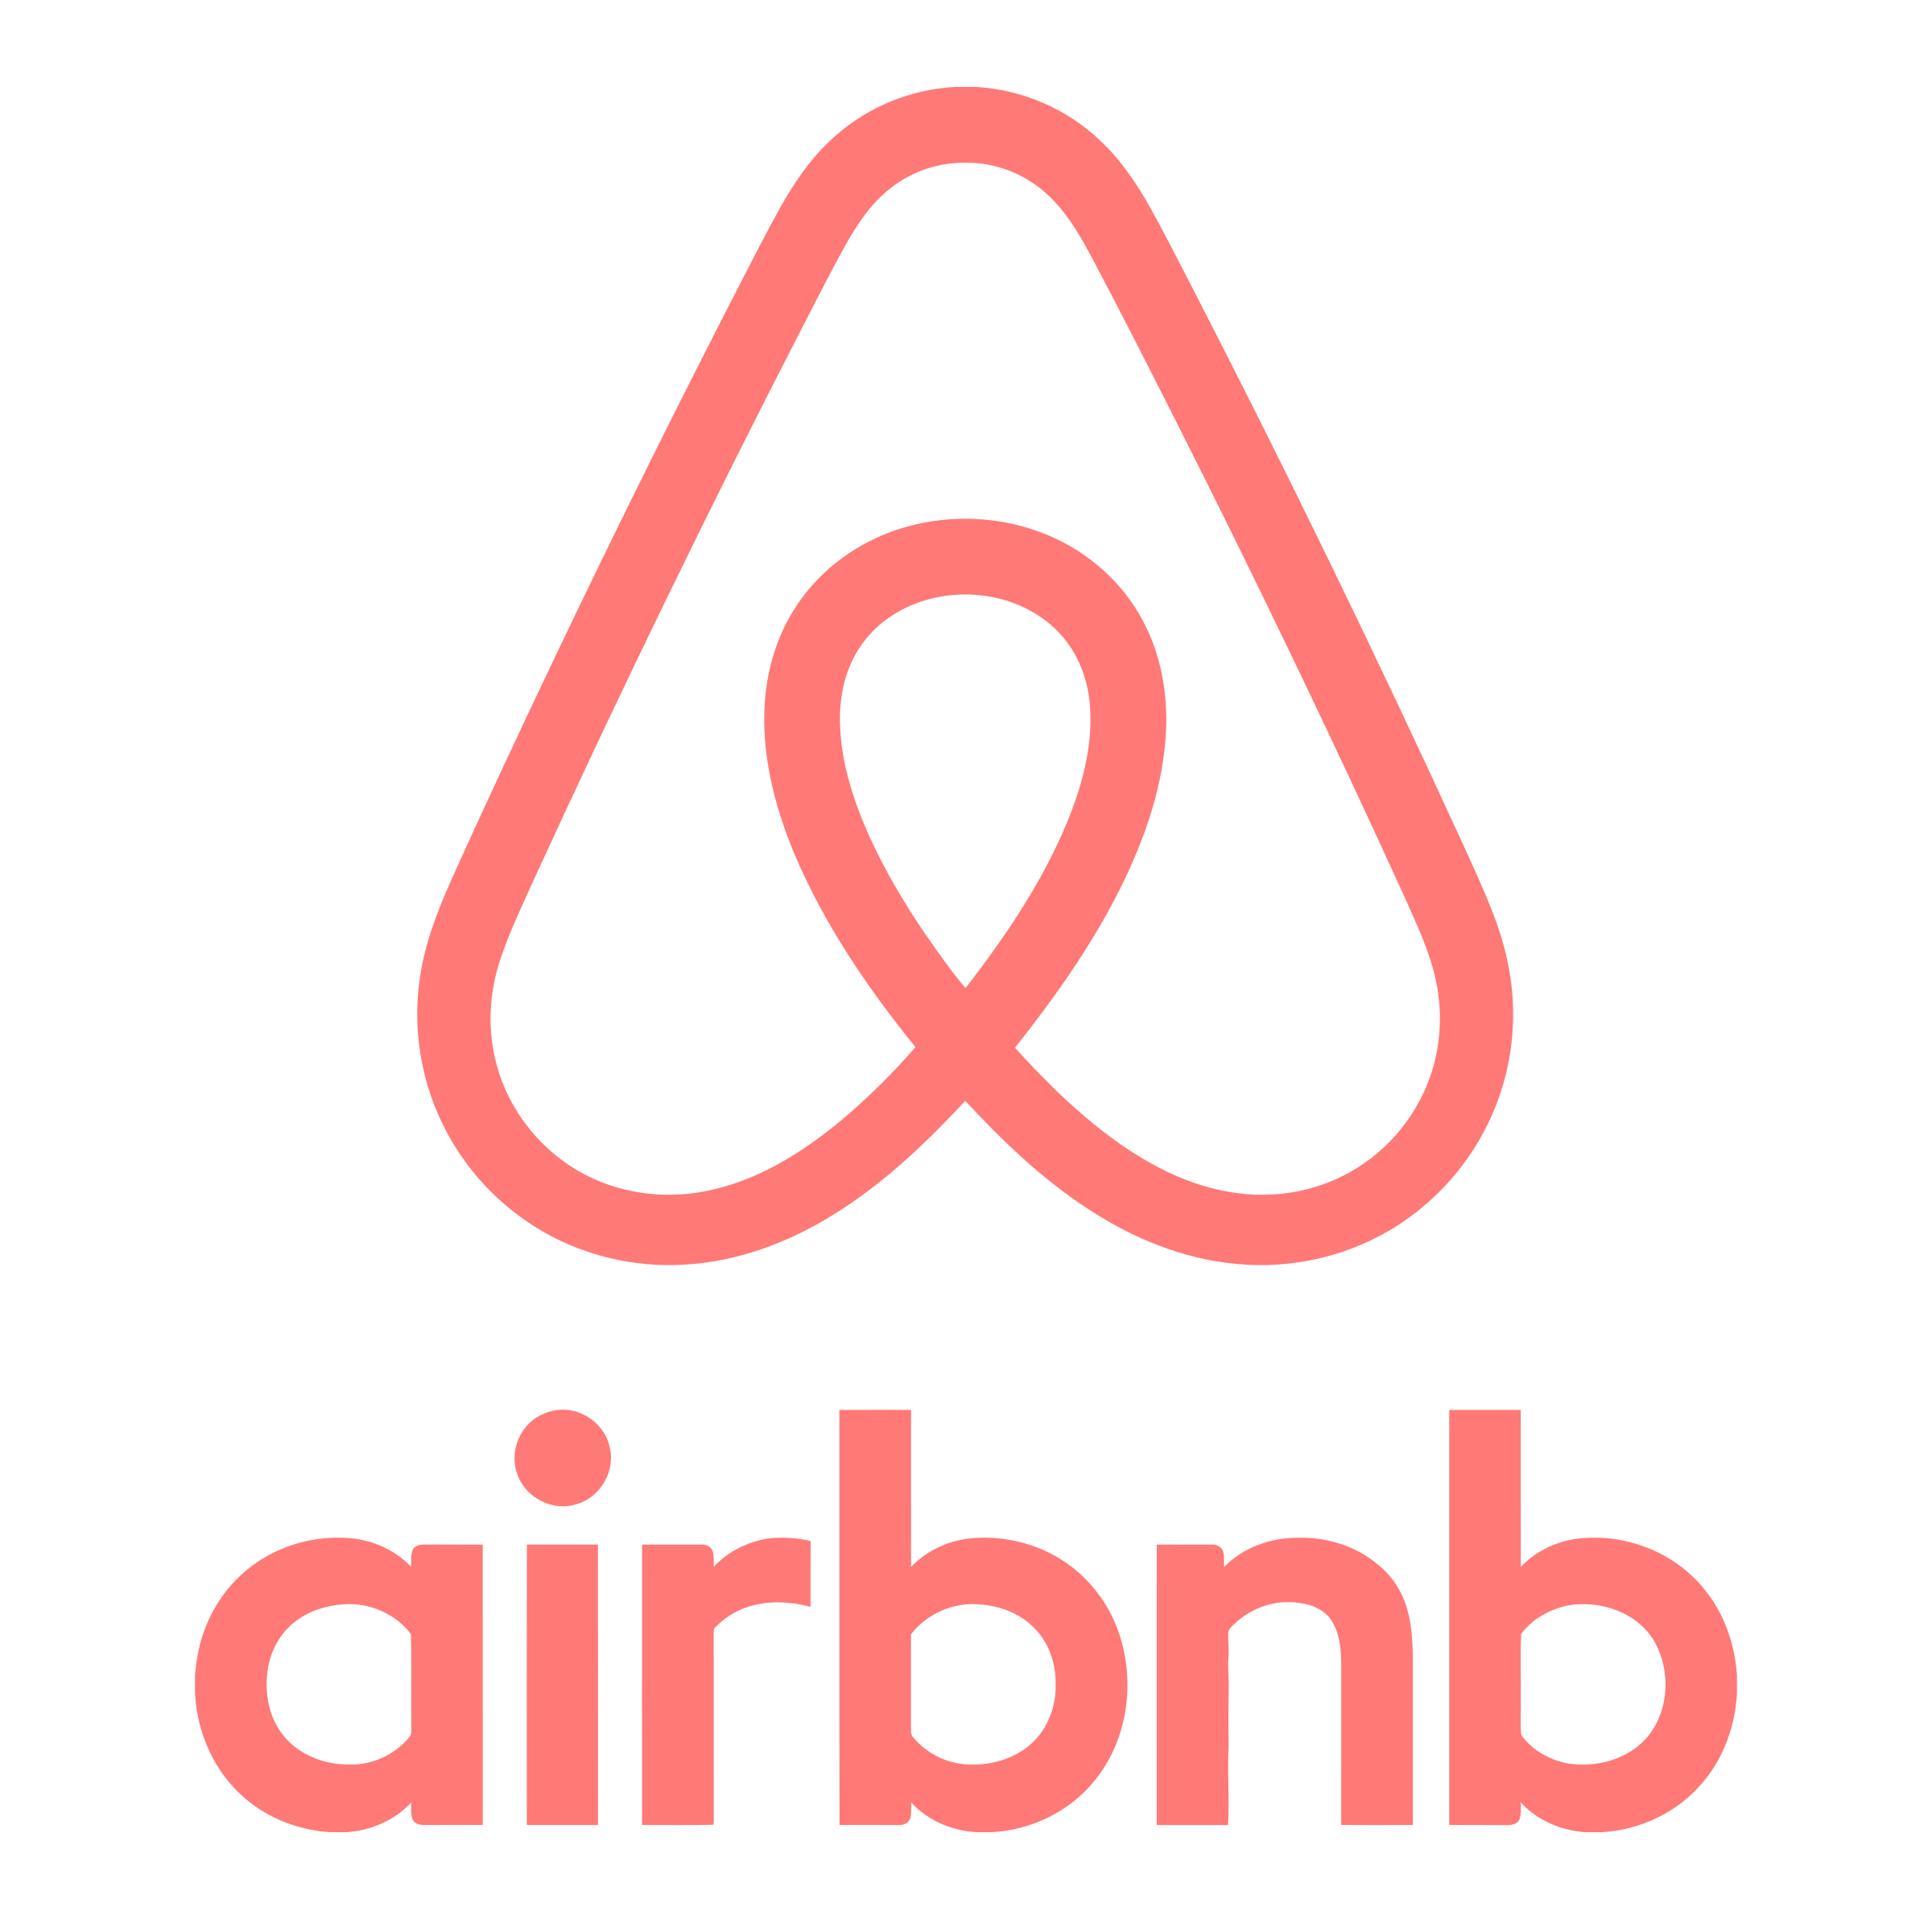 airbnb rooms scraper